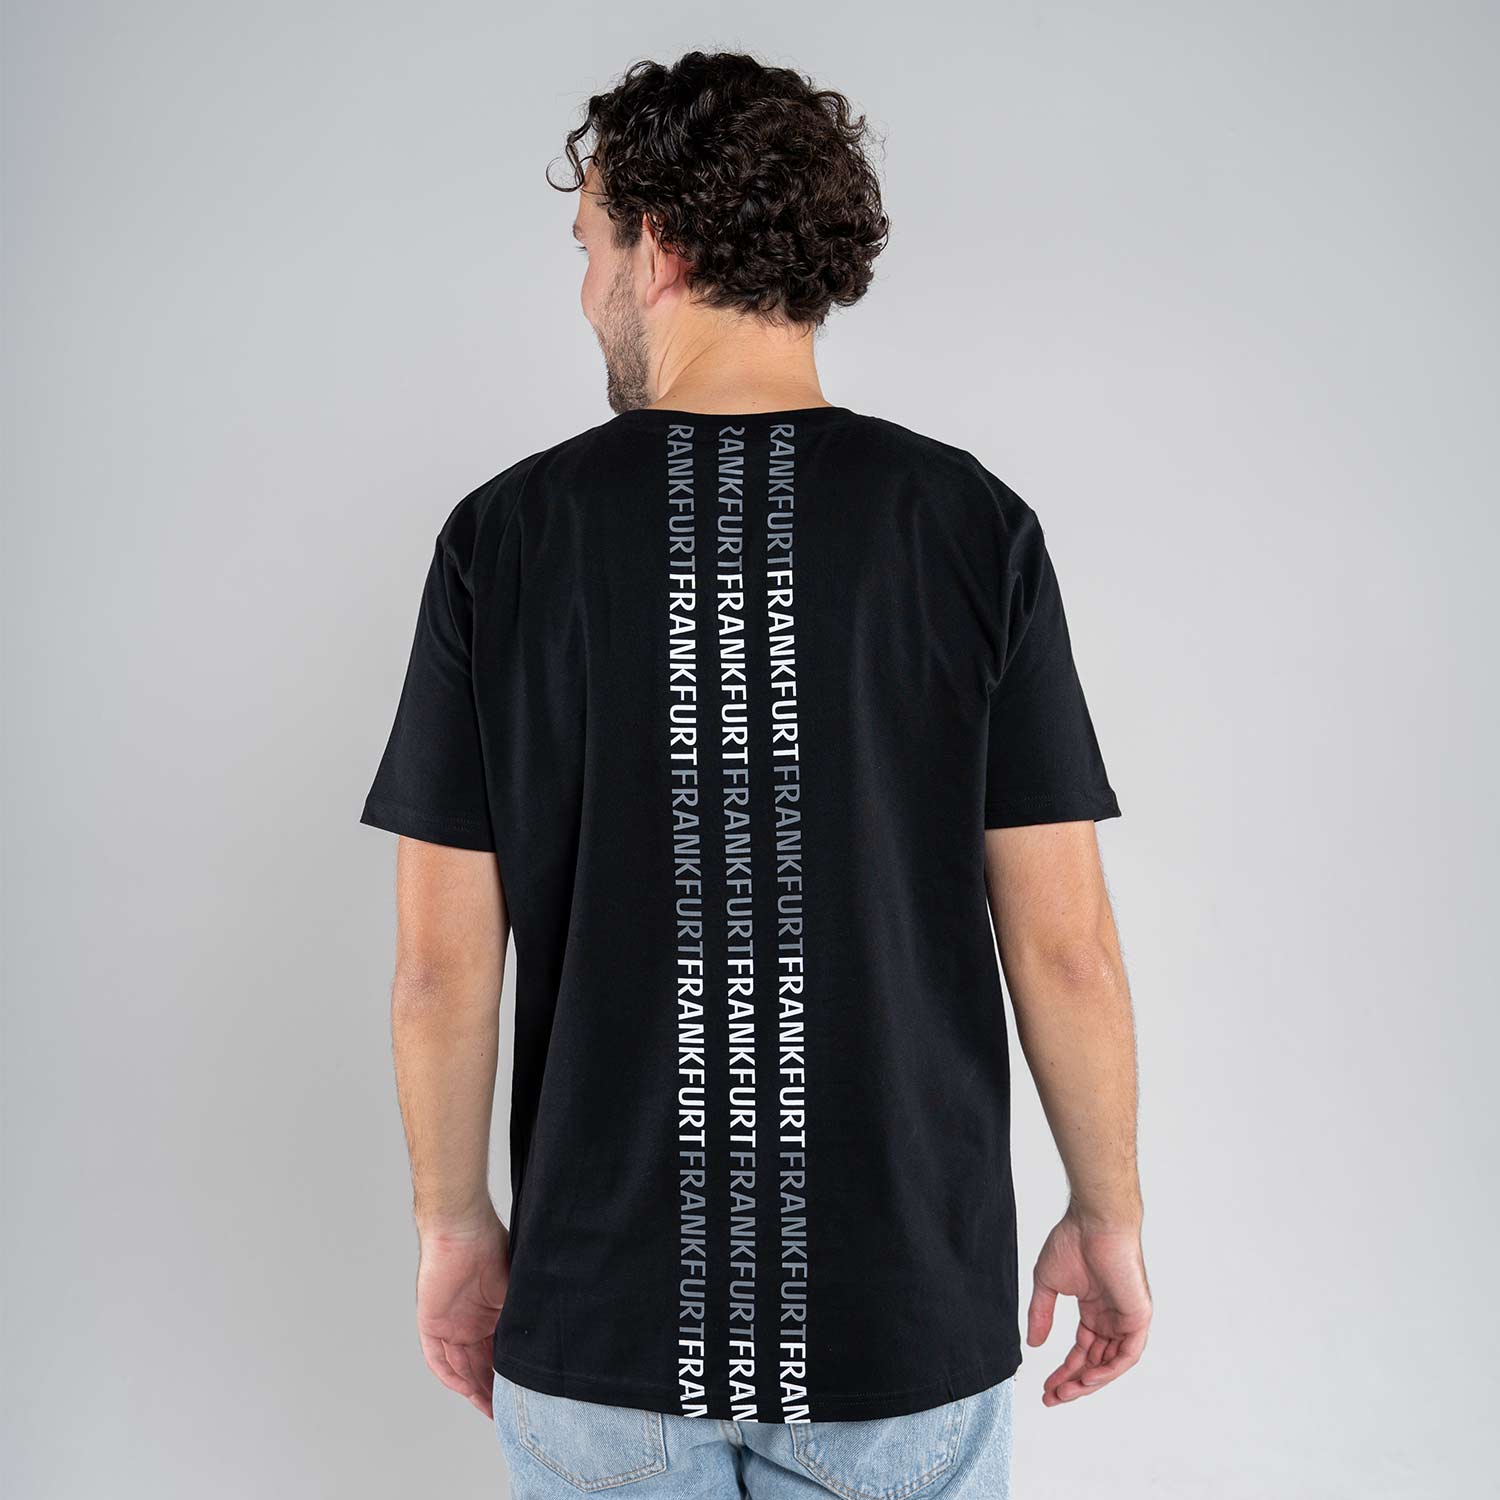 Bild 9: T-Shirt Backstripes